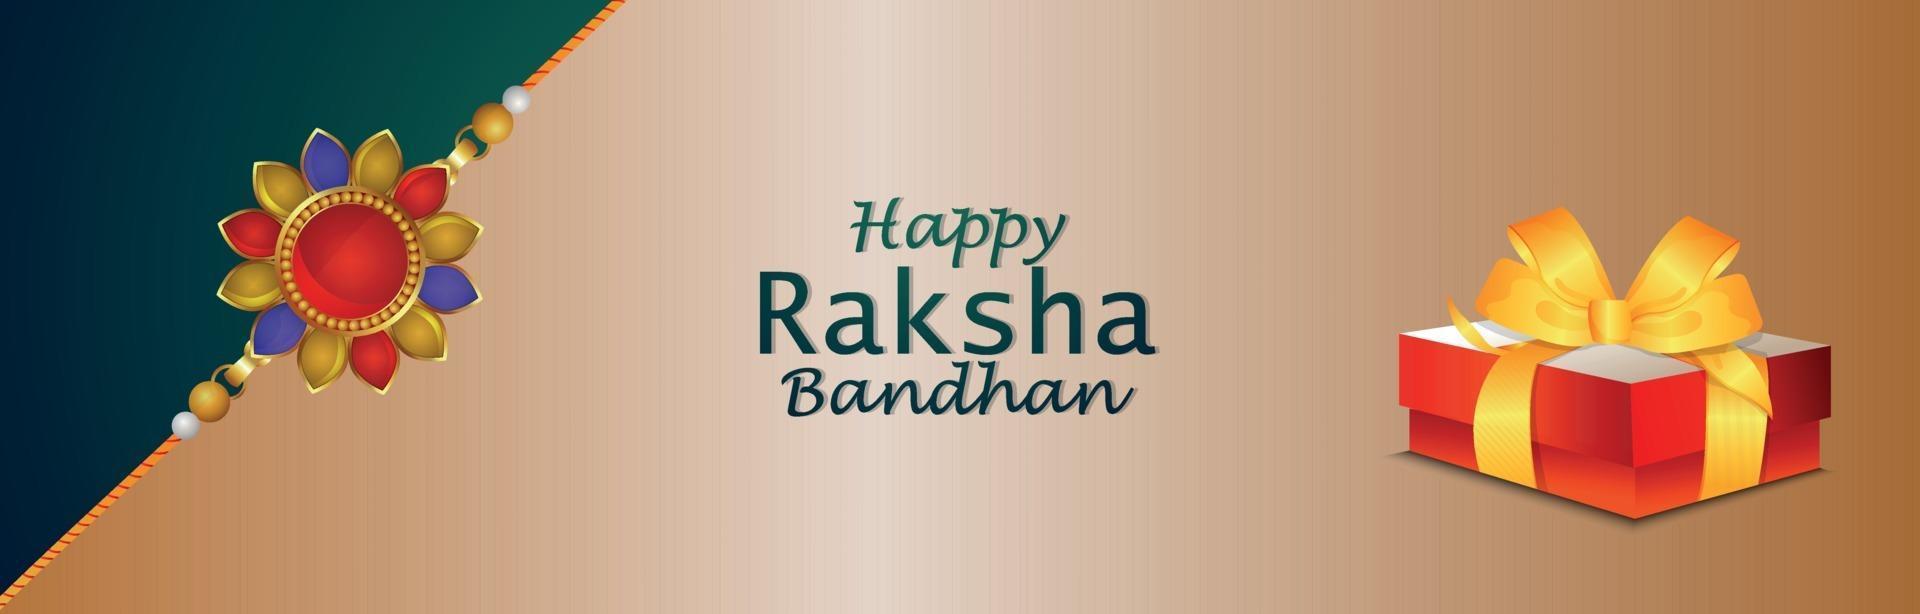 joyeux raksha bandhan cadeaux de vecteur créatif et rakhi en cristal